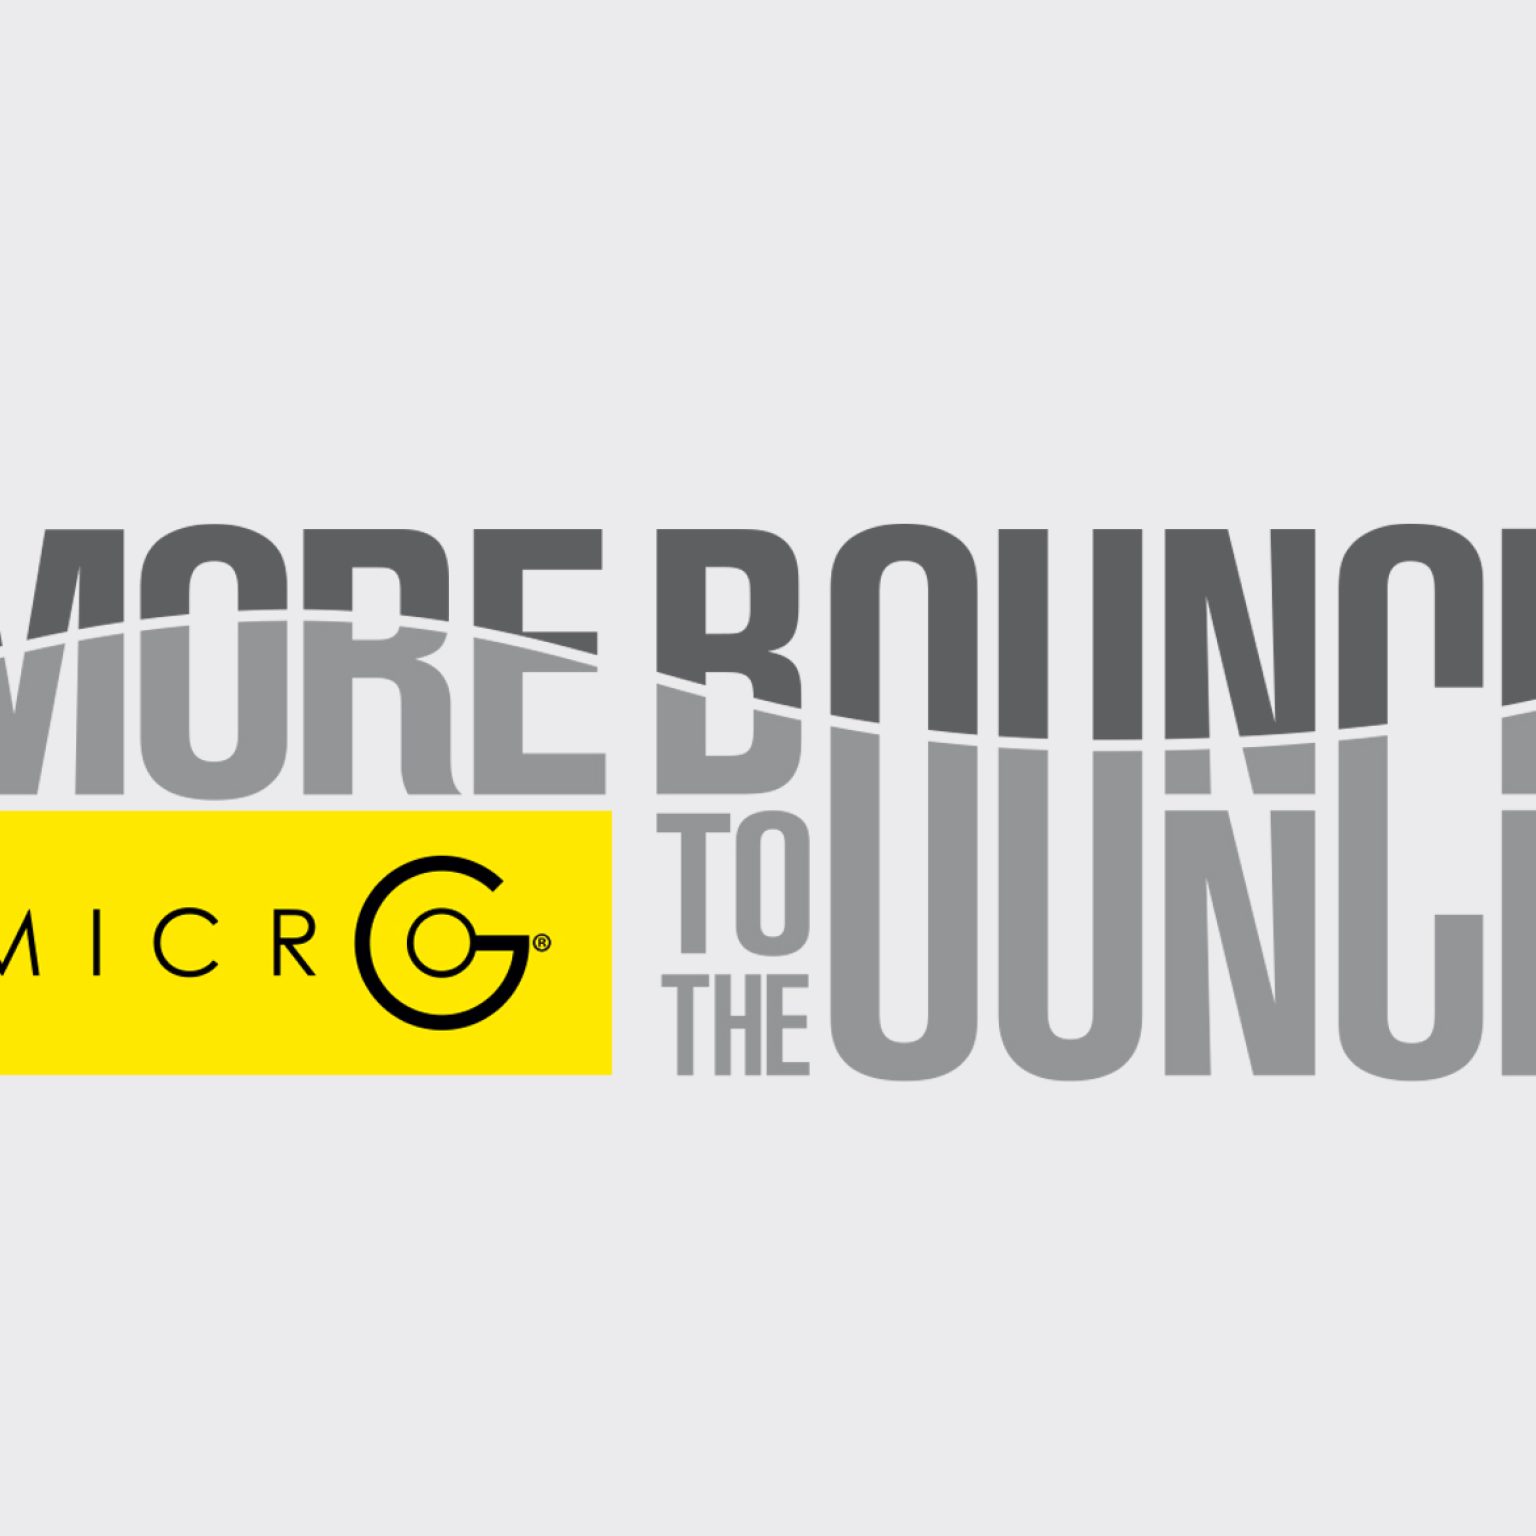 Logo design for Under Armor MicroG gray background